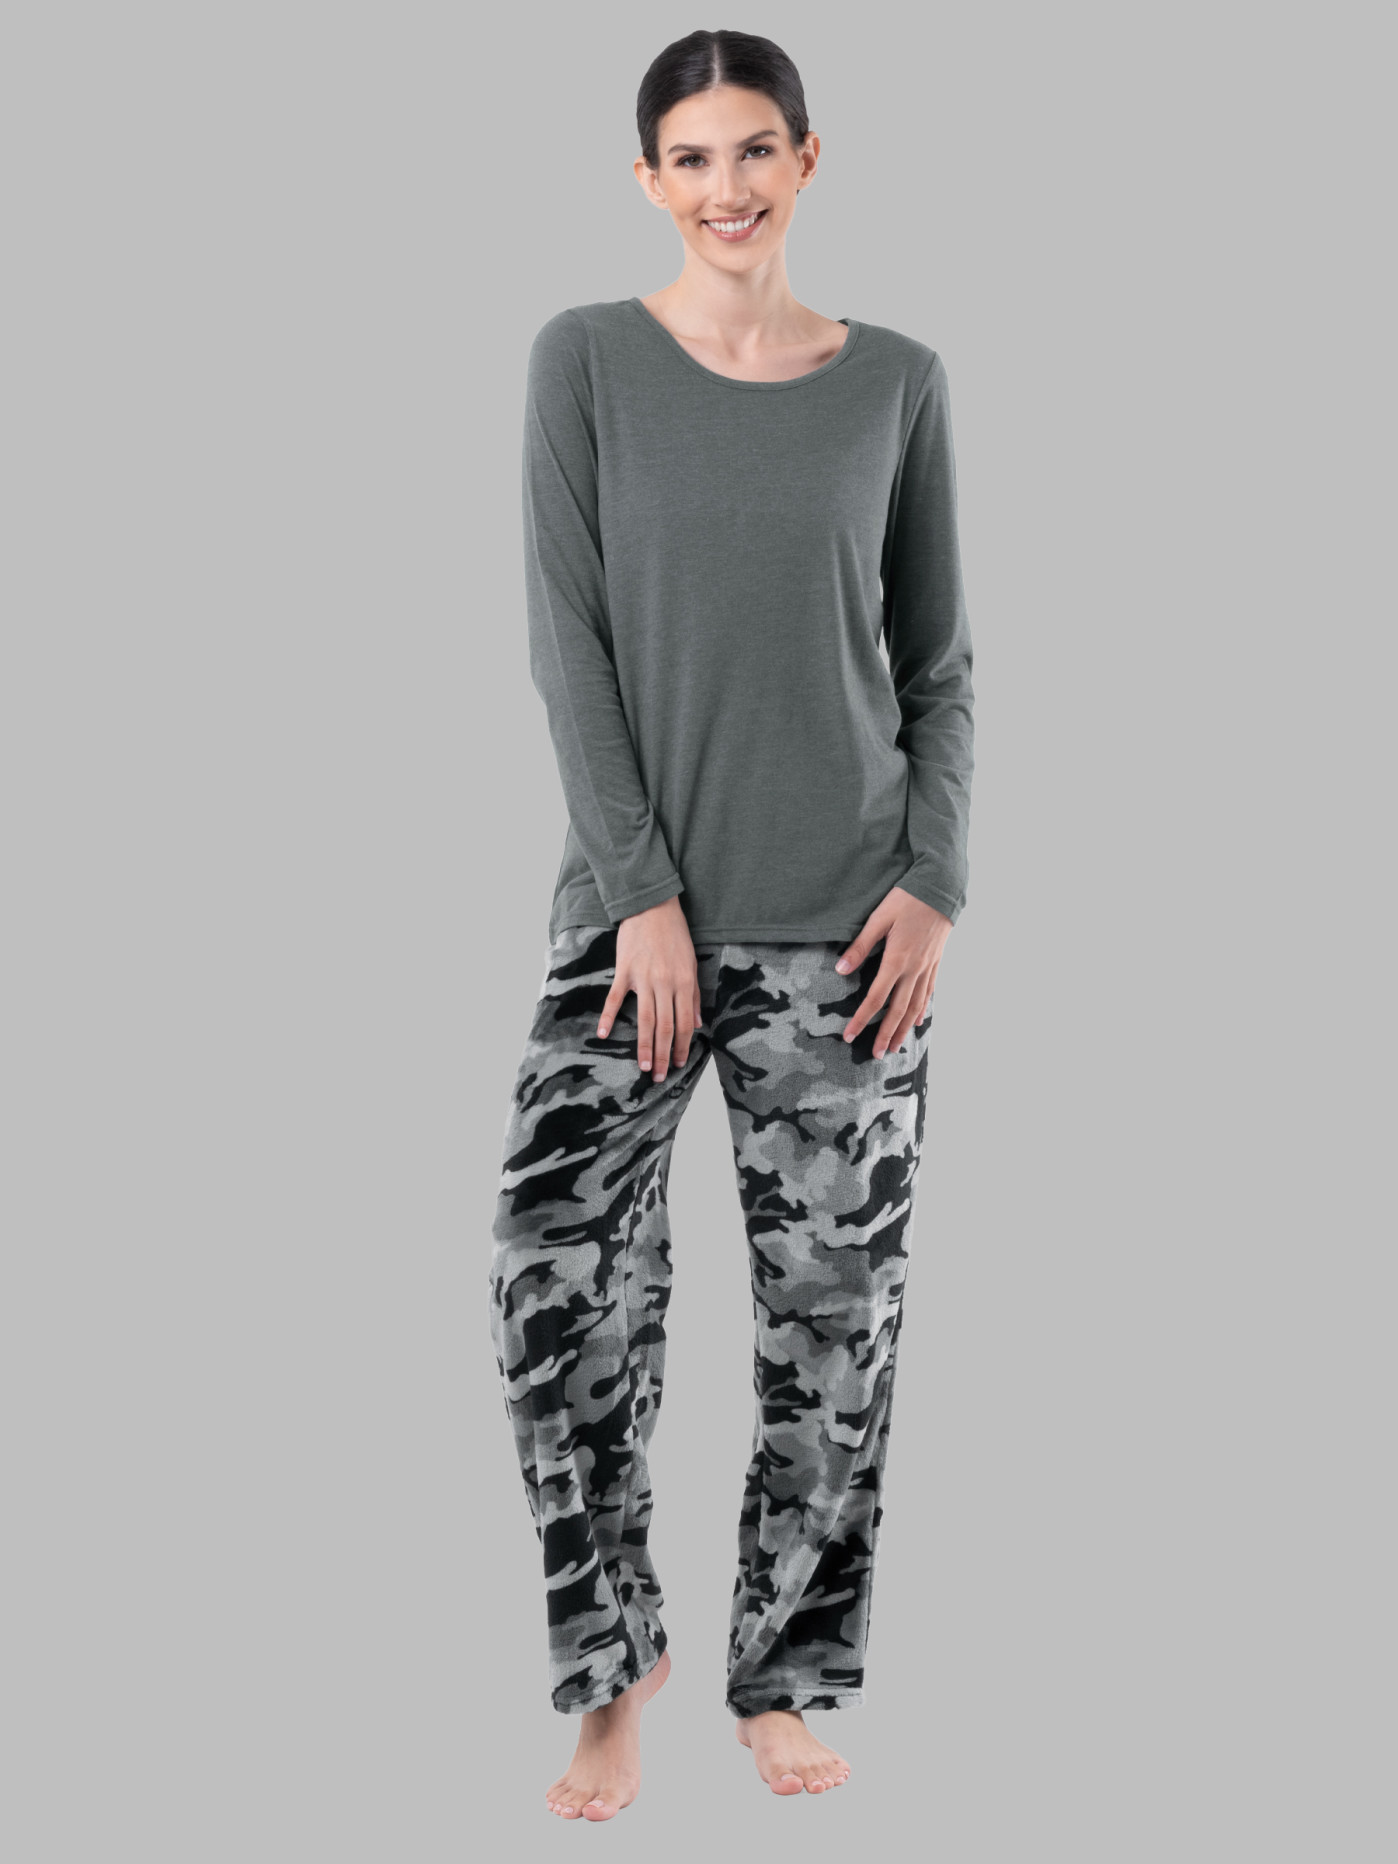 Women's Kellogg's Cereal Brunch Club Long Sleeve Pajama Top & Banded Bottom  Pajama Pants Set